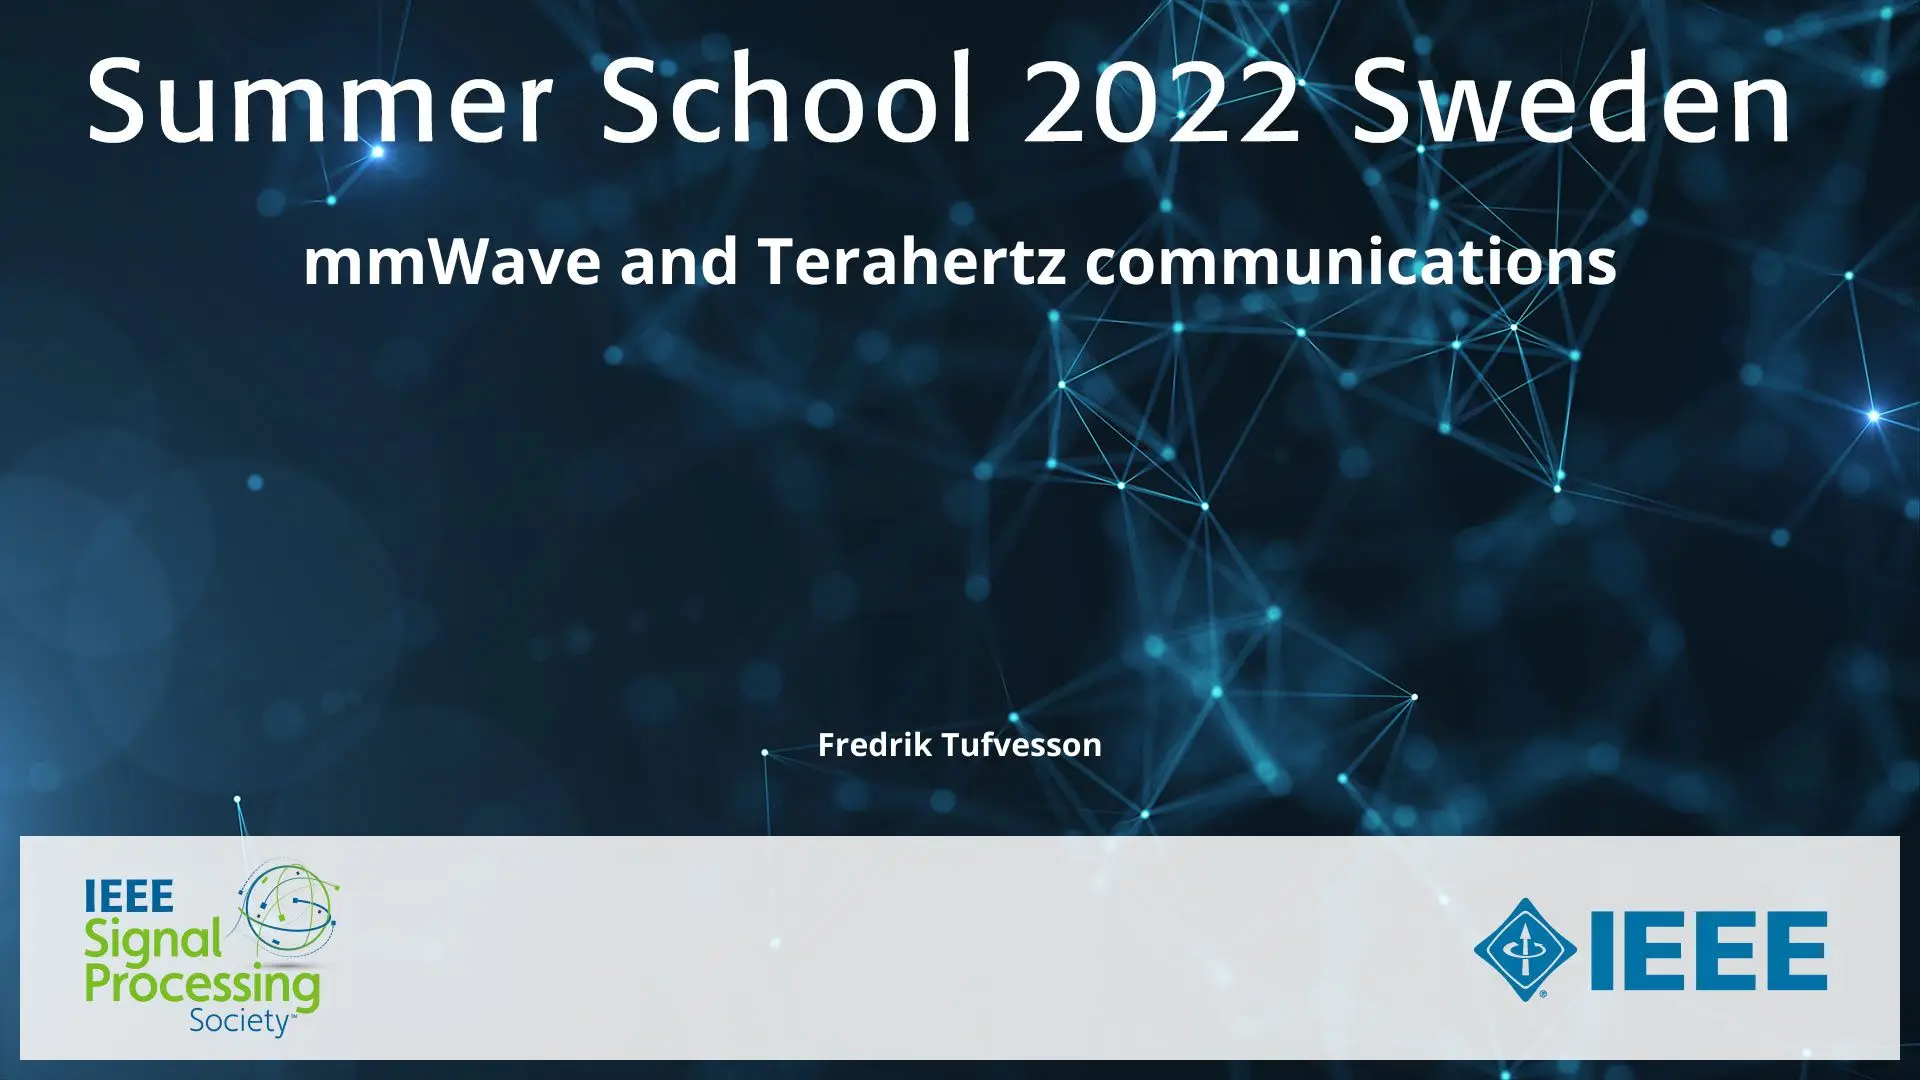 mmWave and Terahertz communications